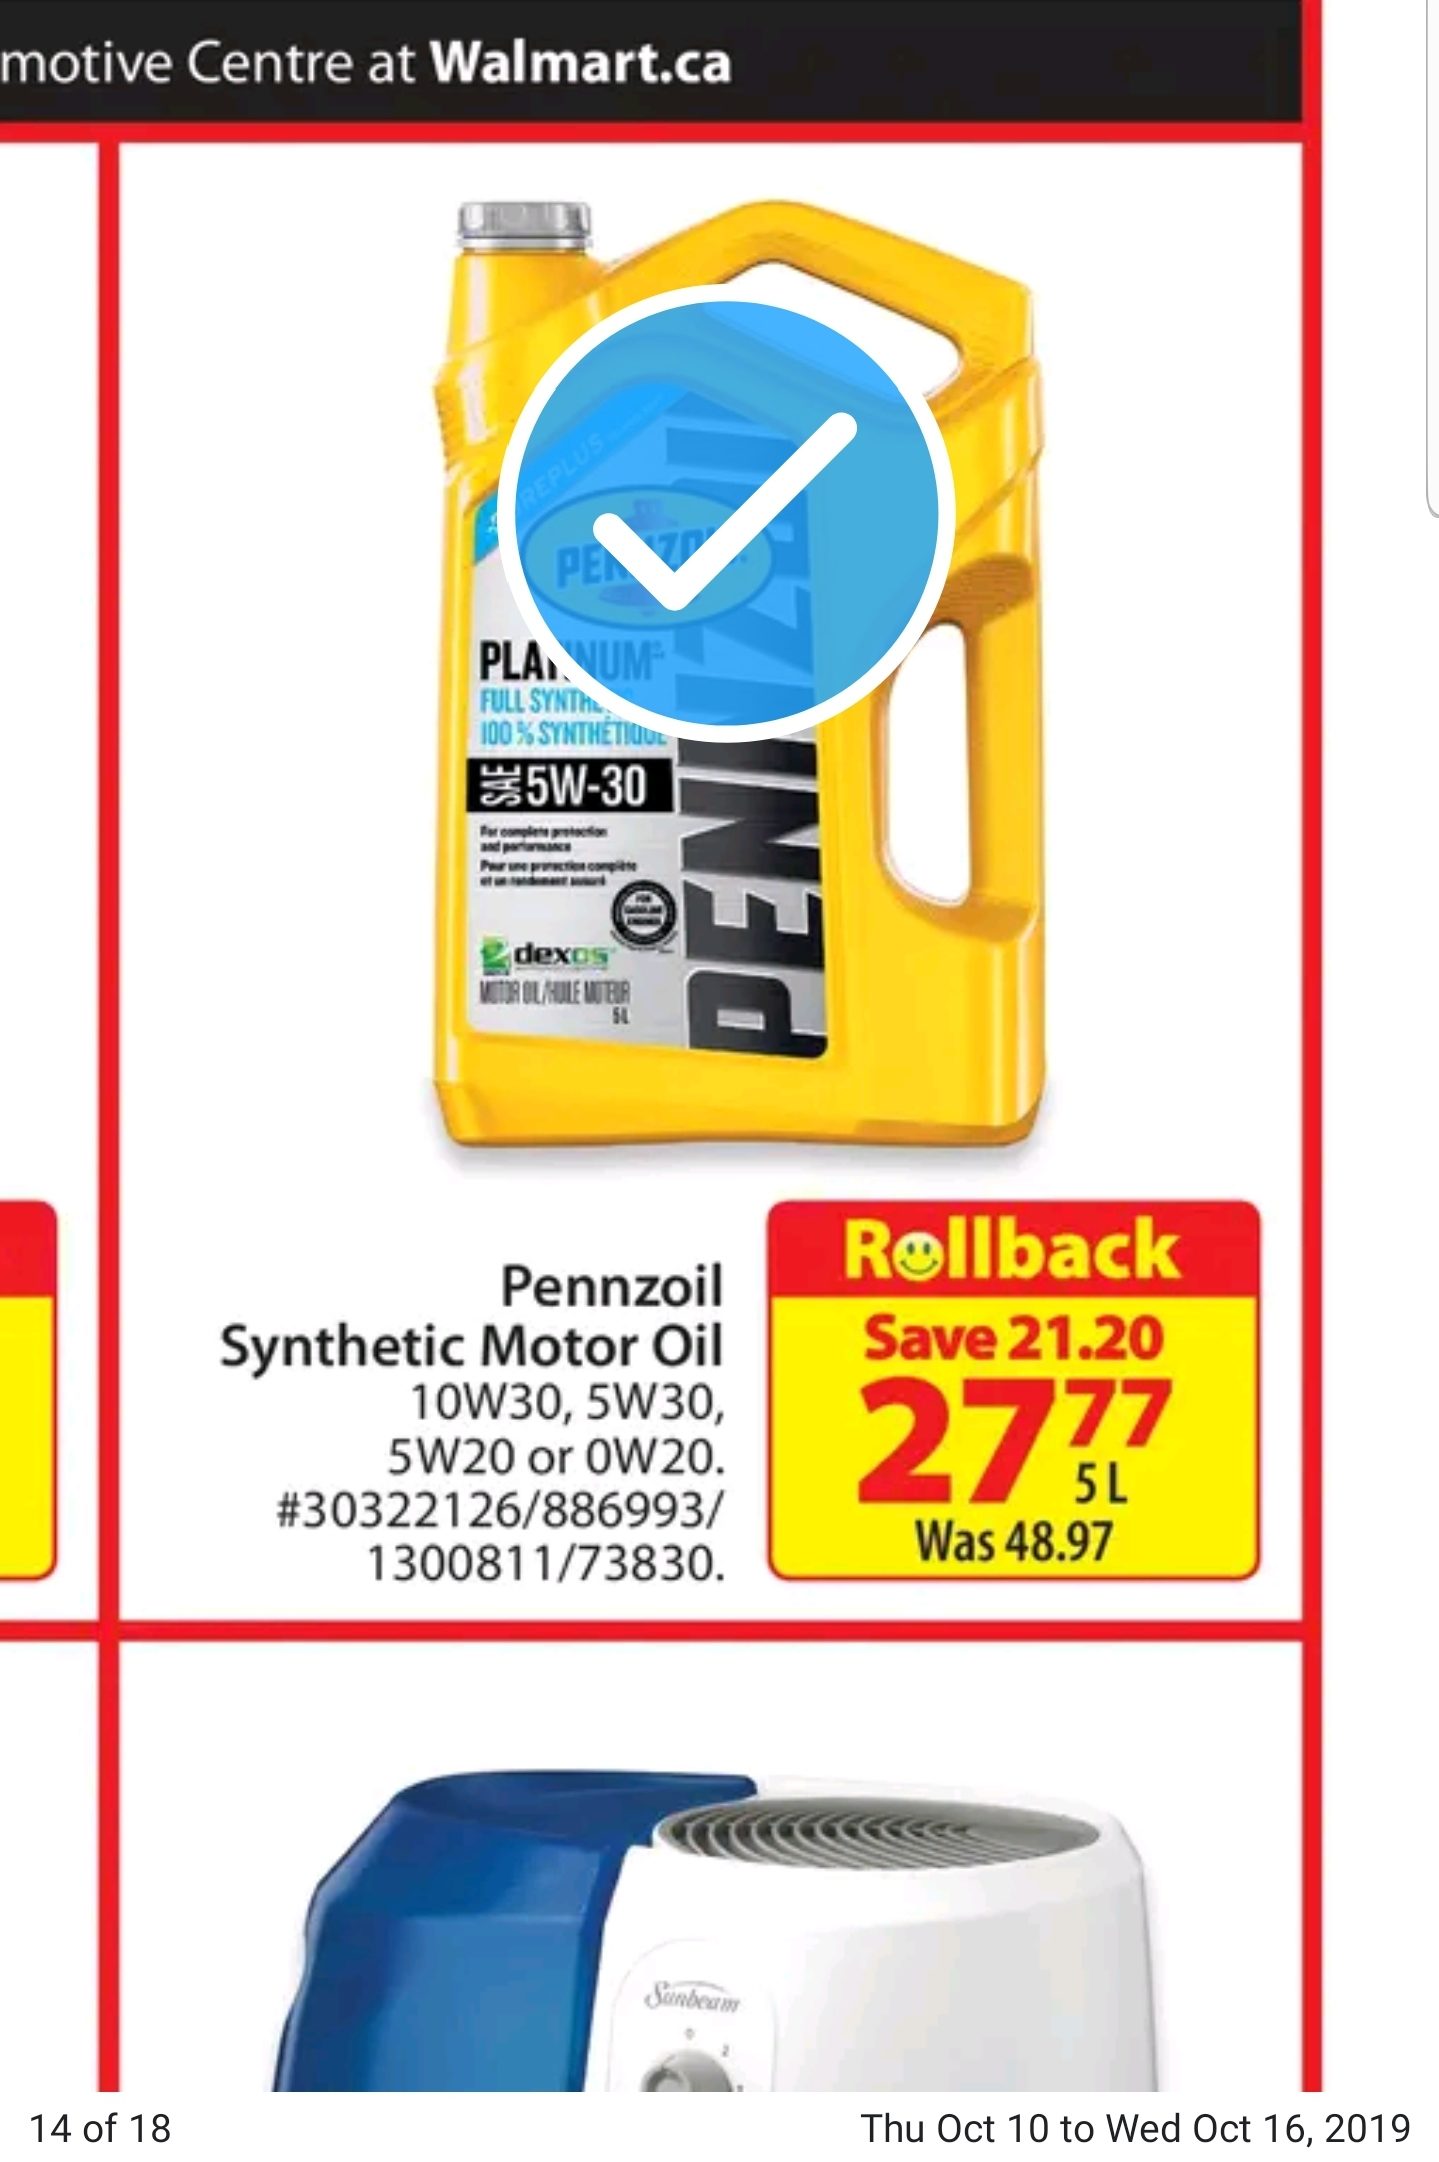  Walmart Pennzoil Synthetic Oil 5L 27 77 10 Rebate 